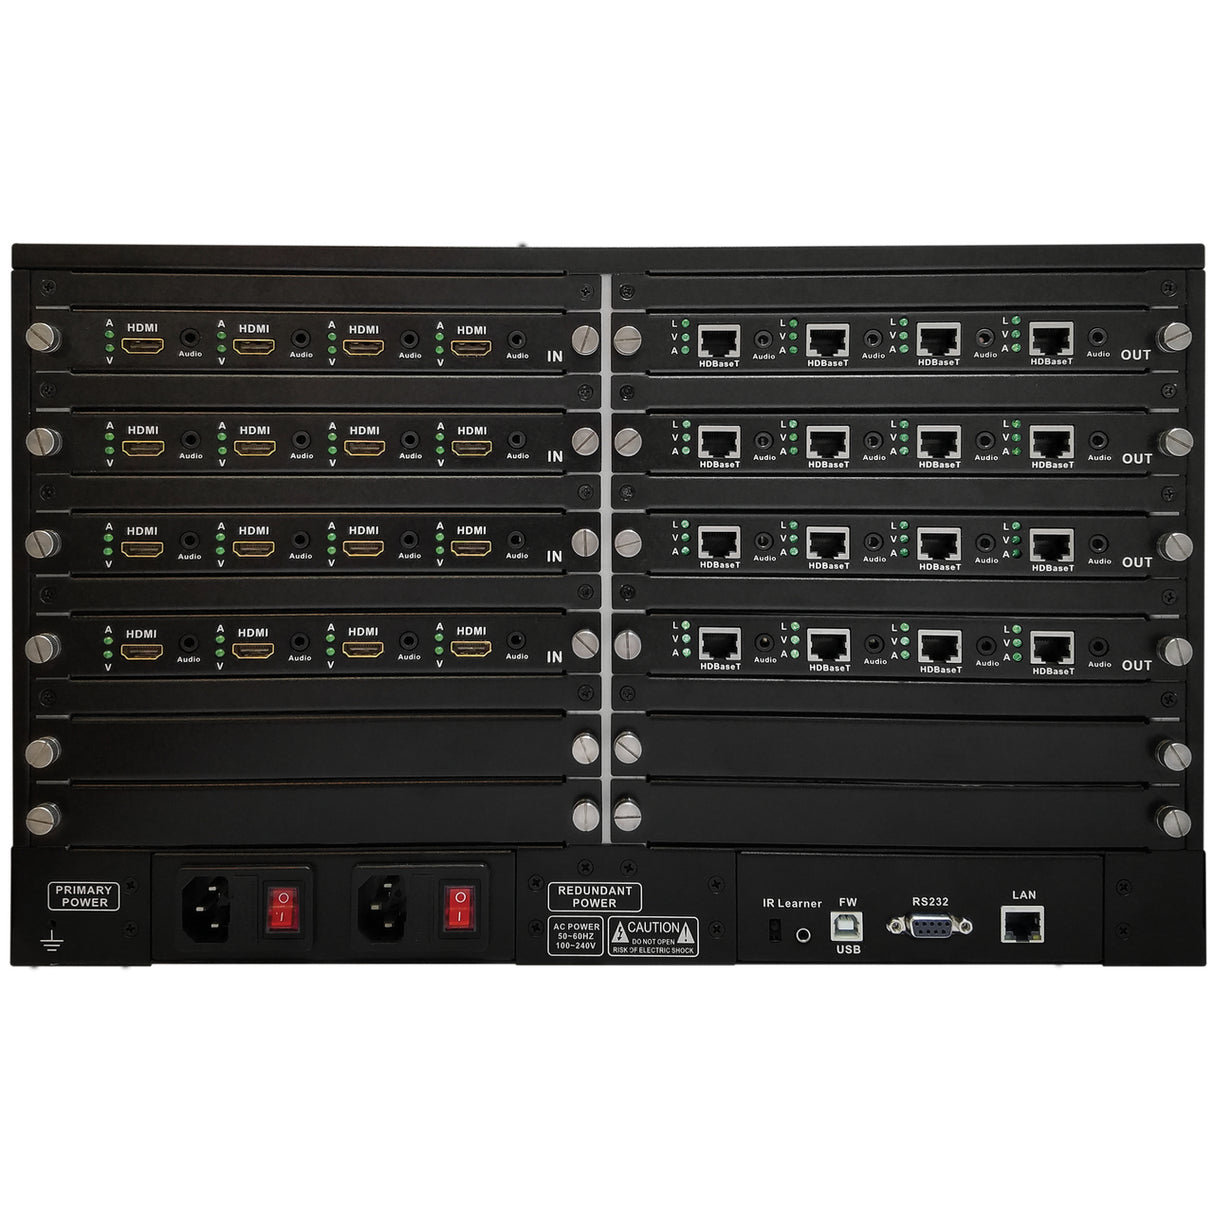 Aurora DXM-1616-G3 | 4K UHD 16x16 Digital Matrix Switcher